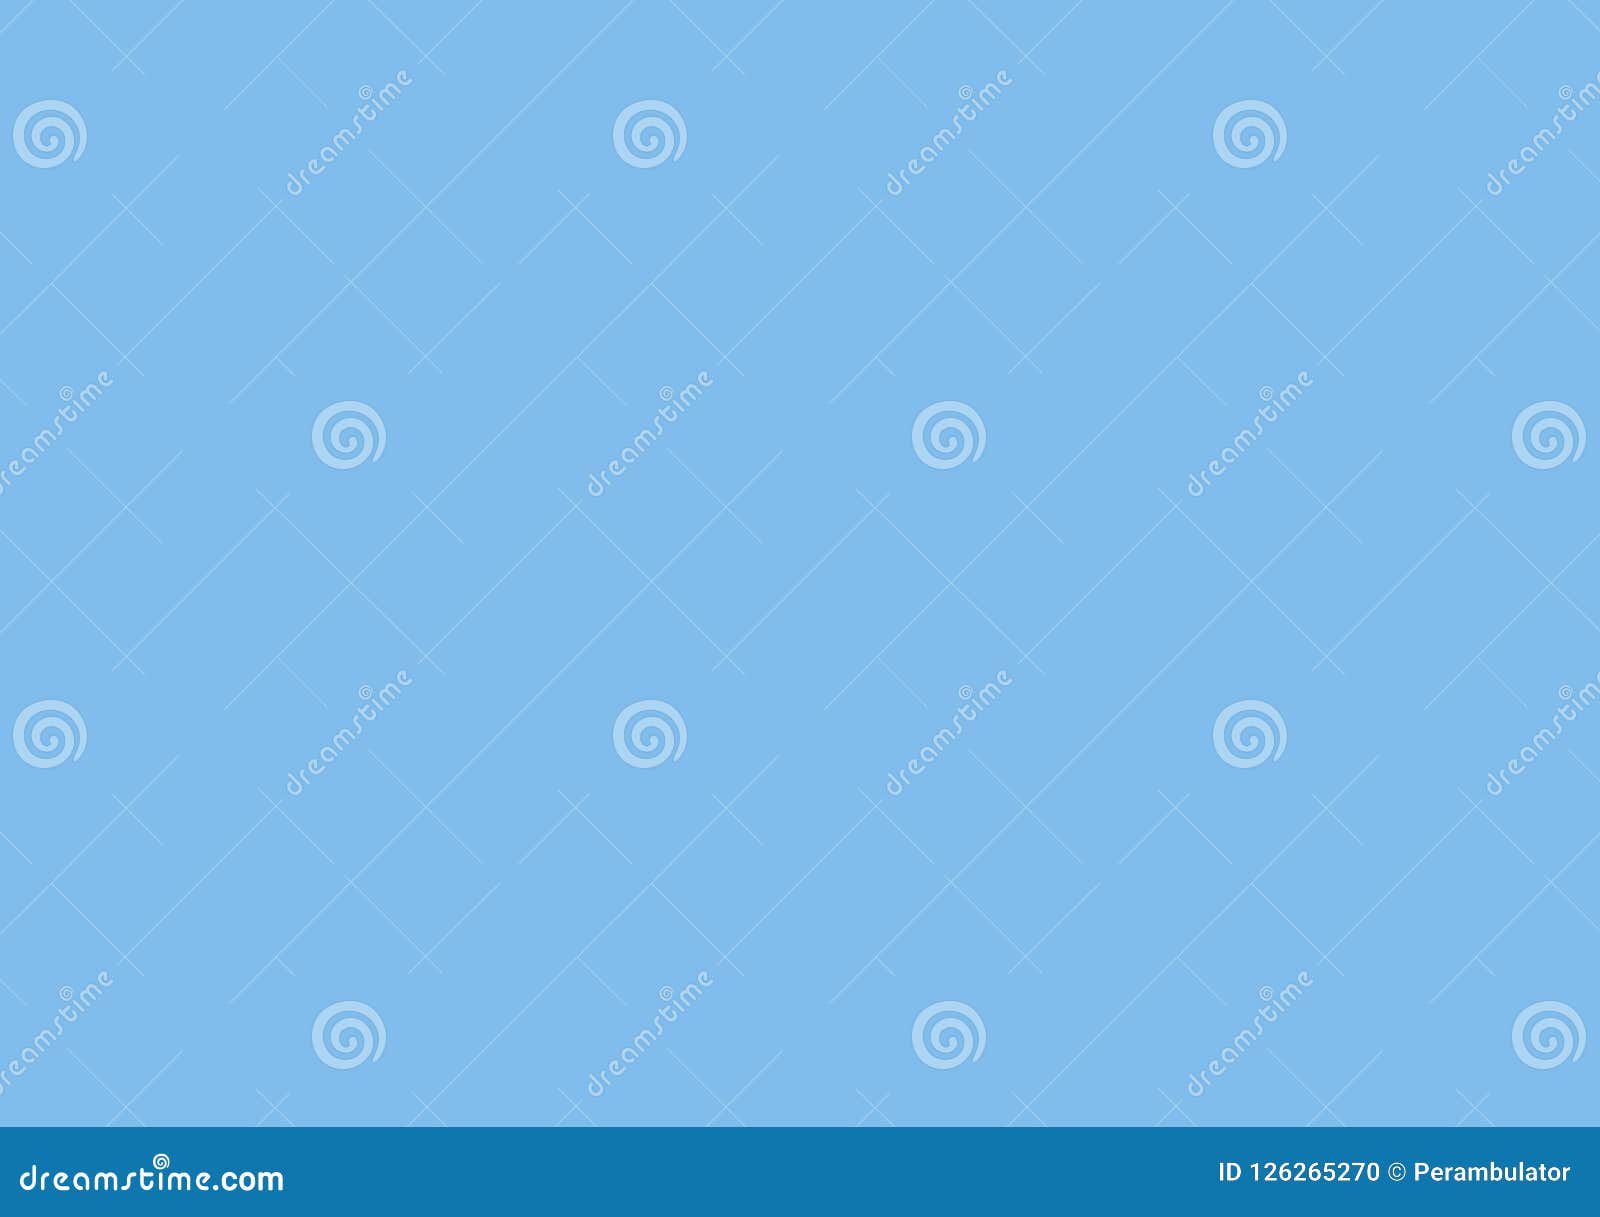 POWDER BLUE BACKGROUND stock photo. Image of sheet, smooth - 126265270